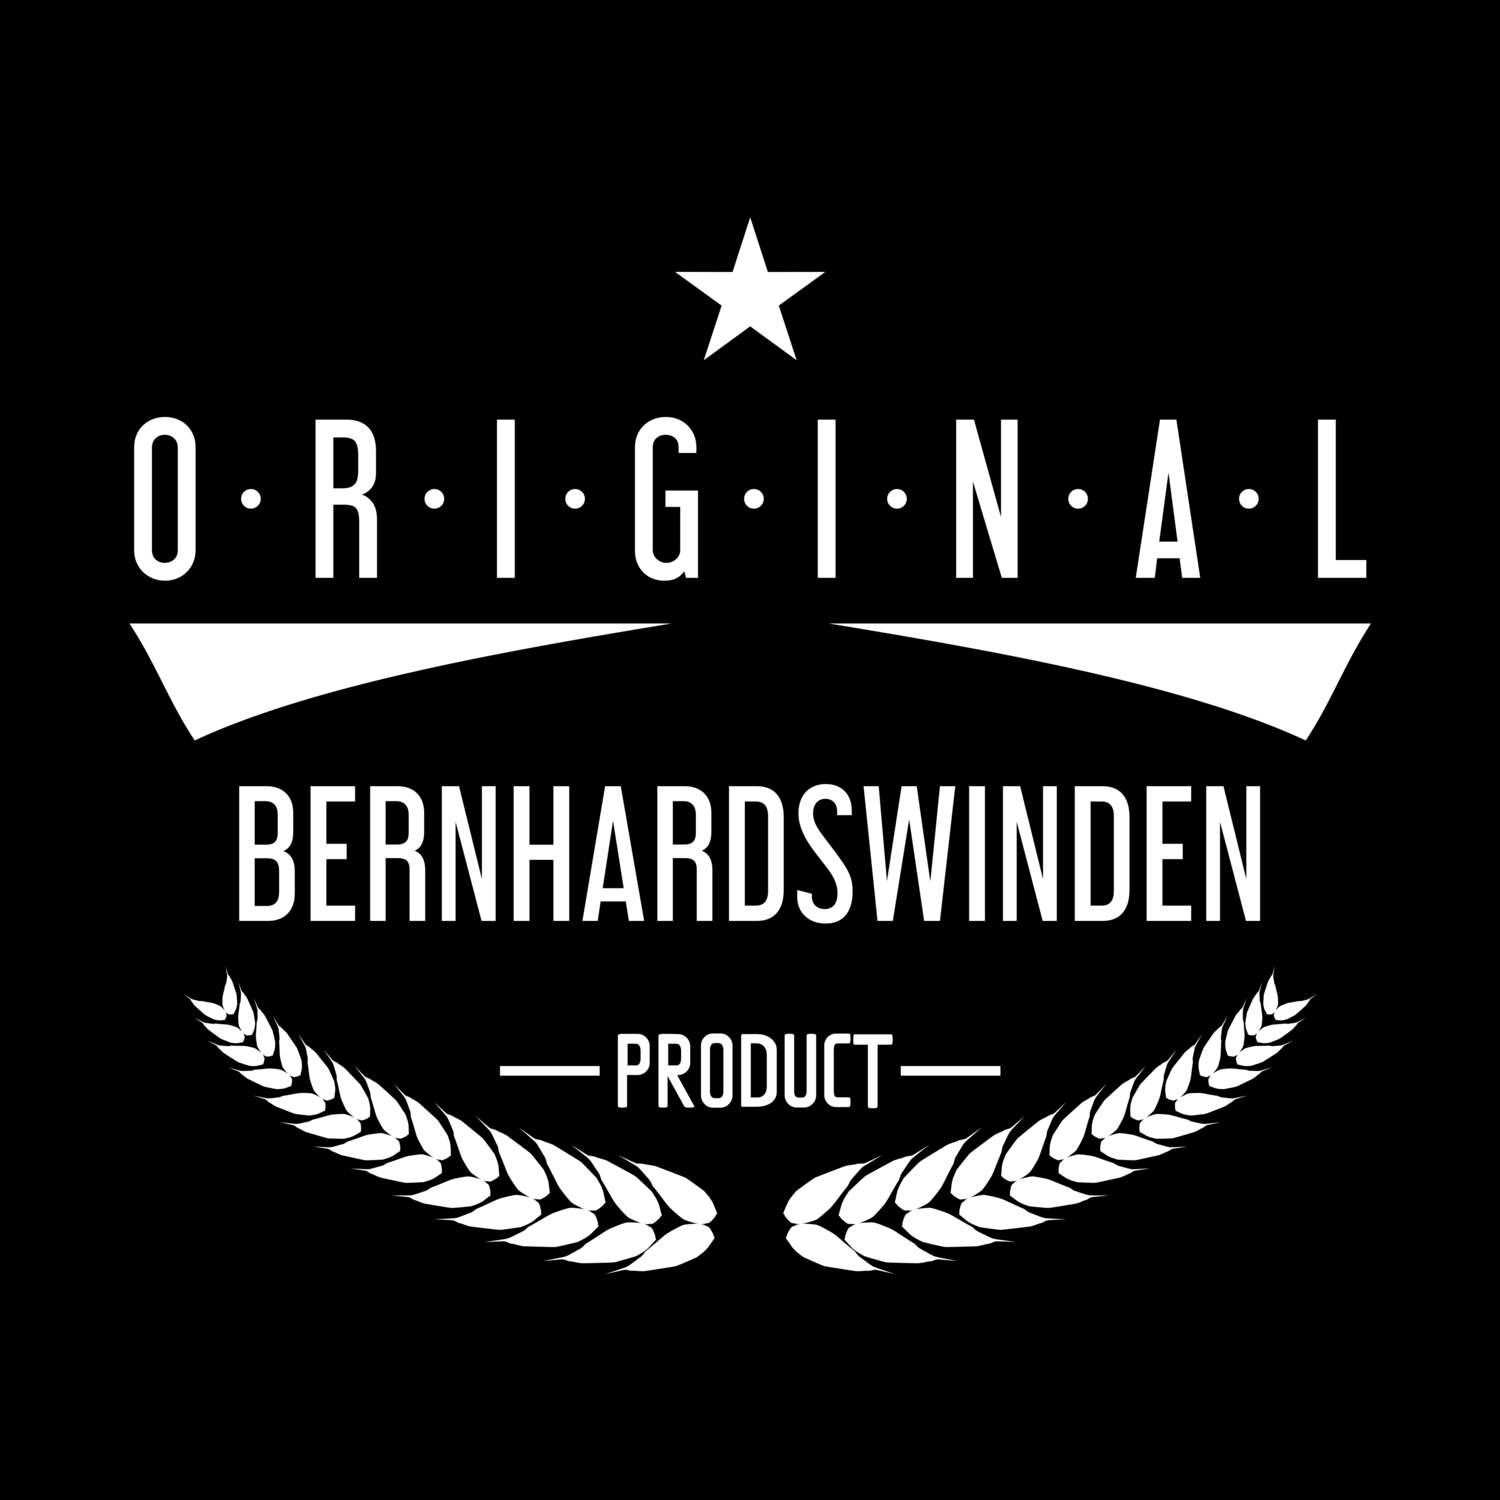 Bernhardswinden T-Shirt »Original Product«